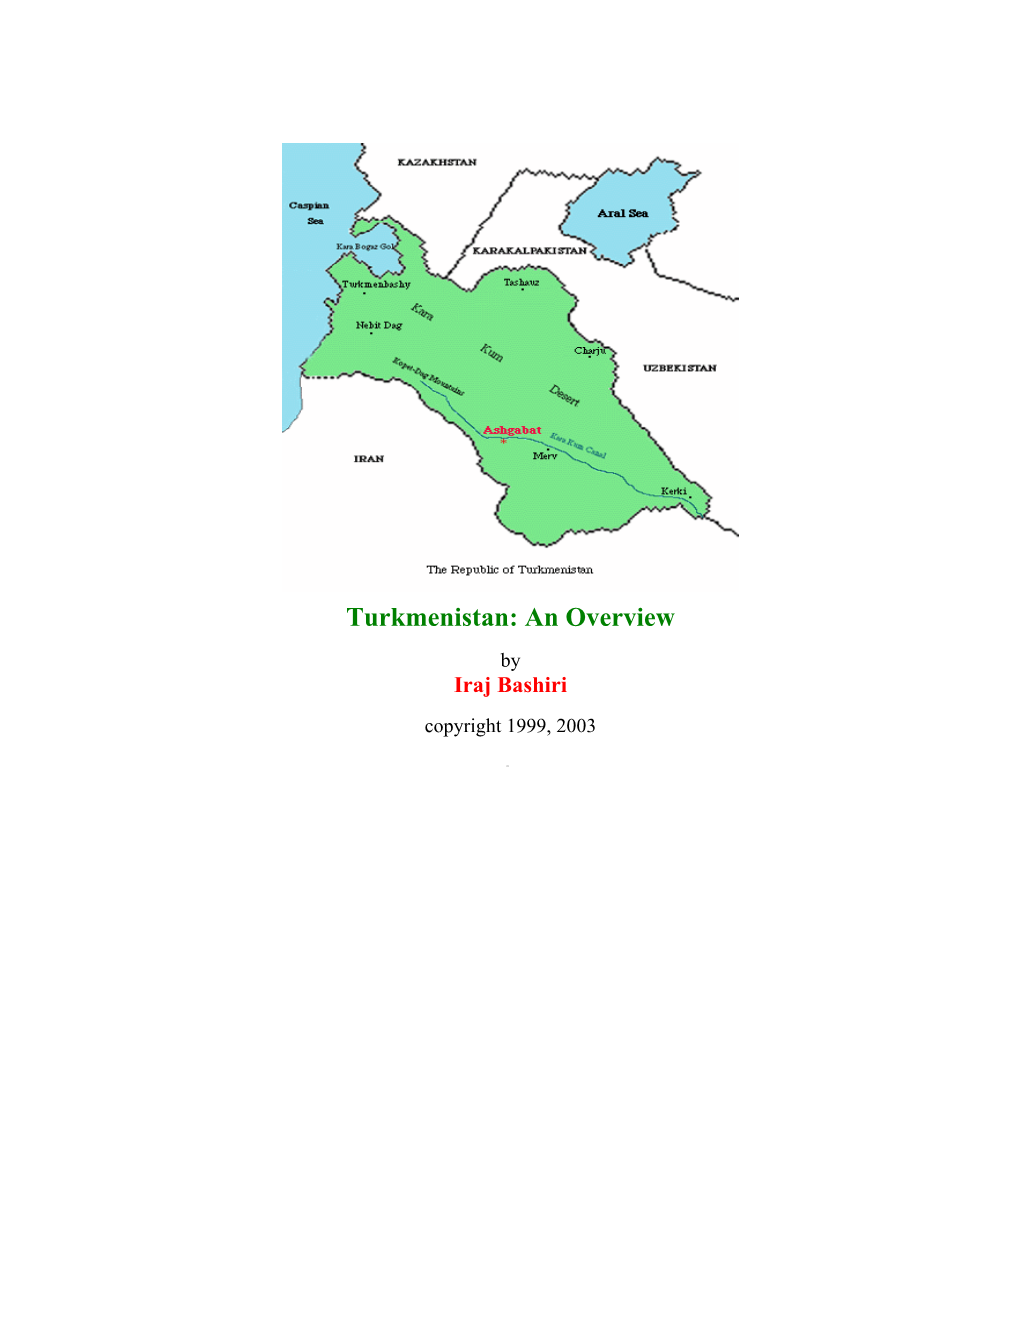 Turkmenistan: an Overview by Iraj Bashiri Copyright 1999, 2003